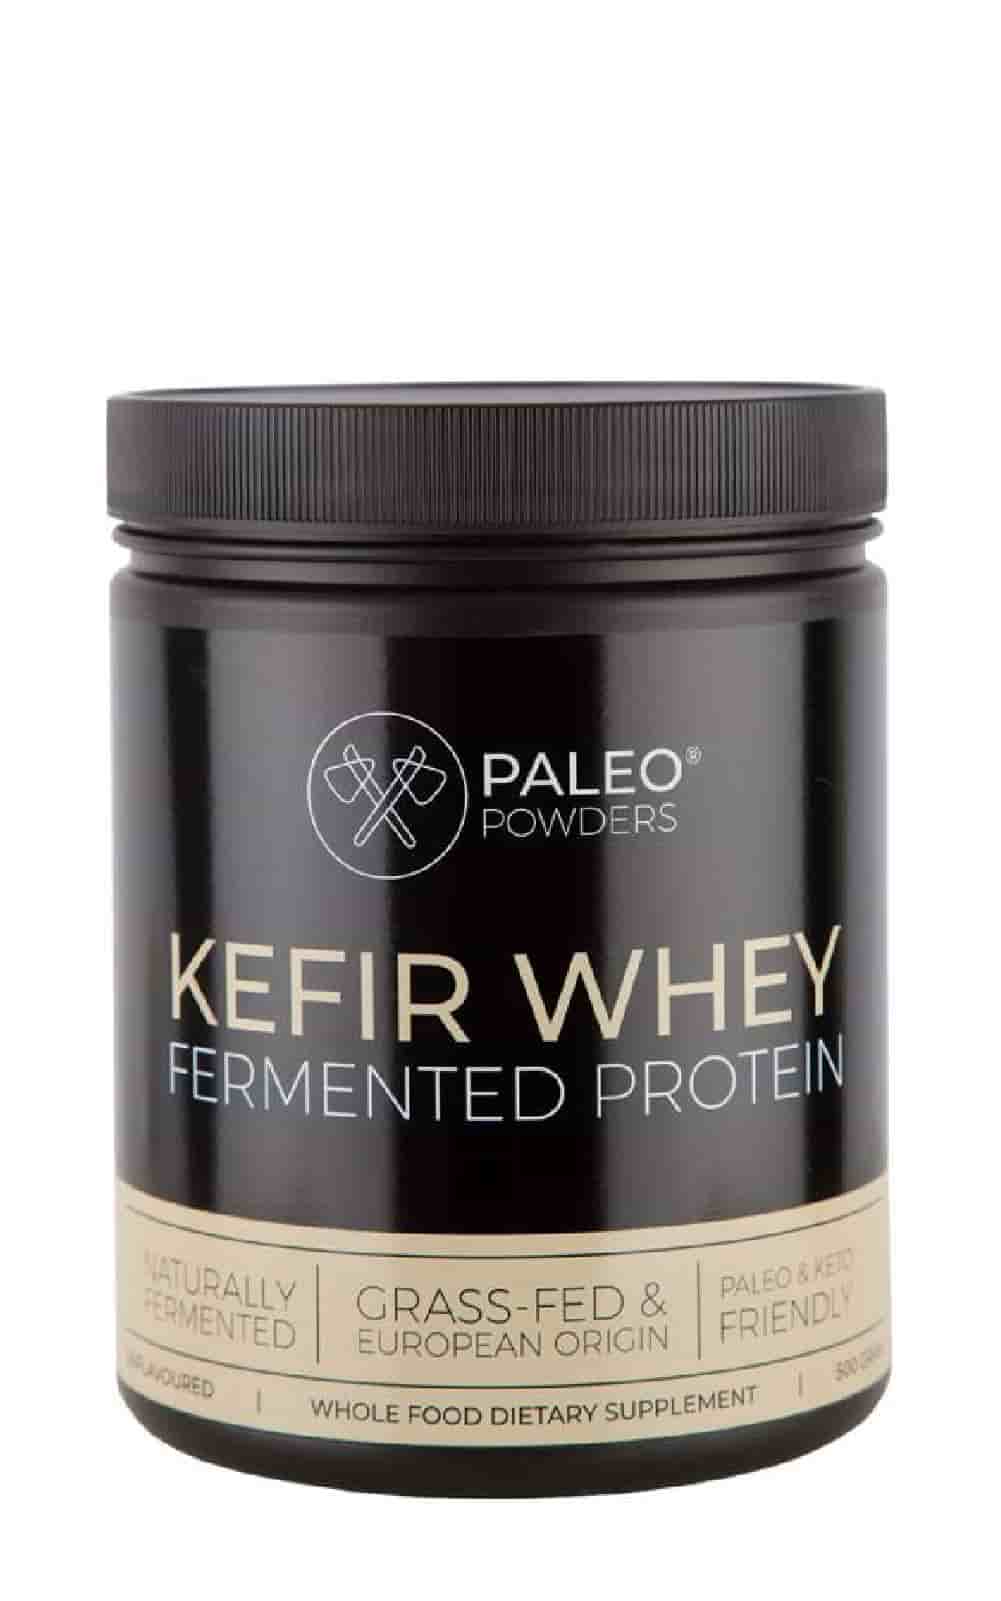 Buy Paleo Powders Kefir Whey - Fermented Protein Powder at LiveHelfi